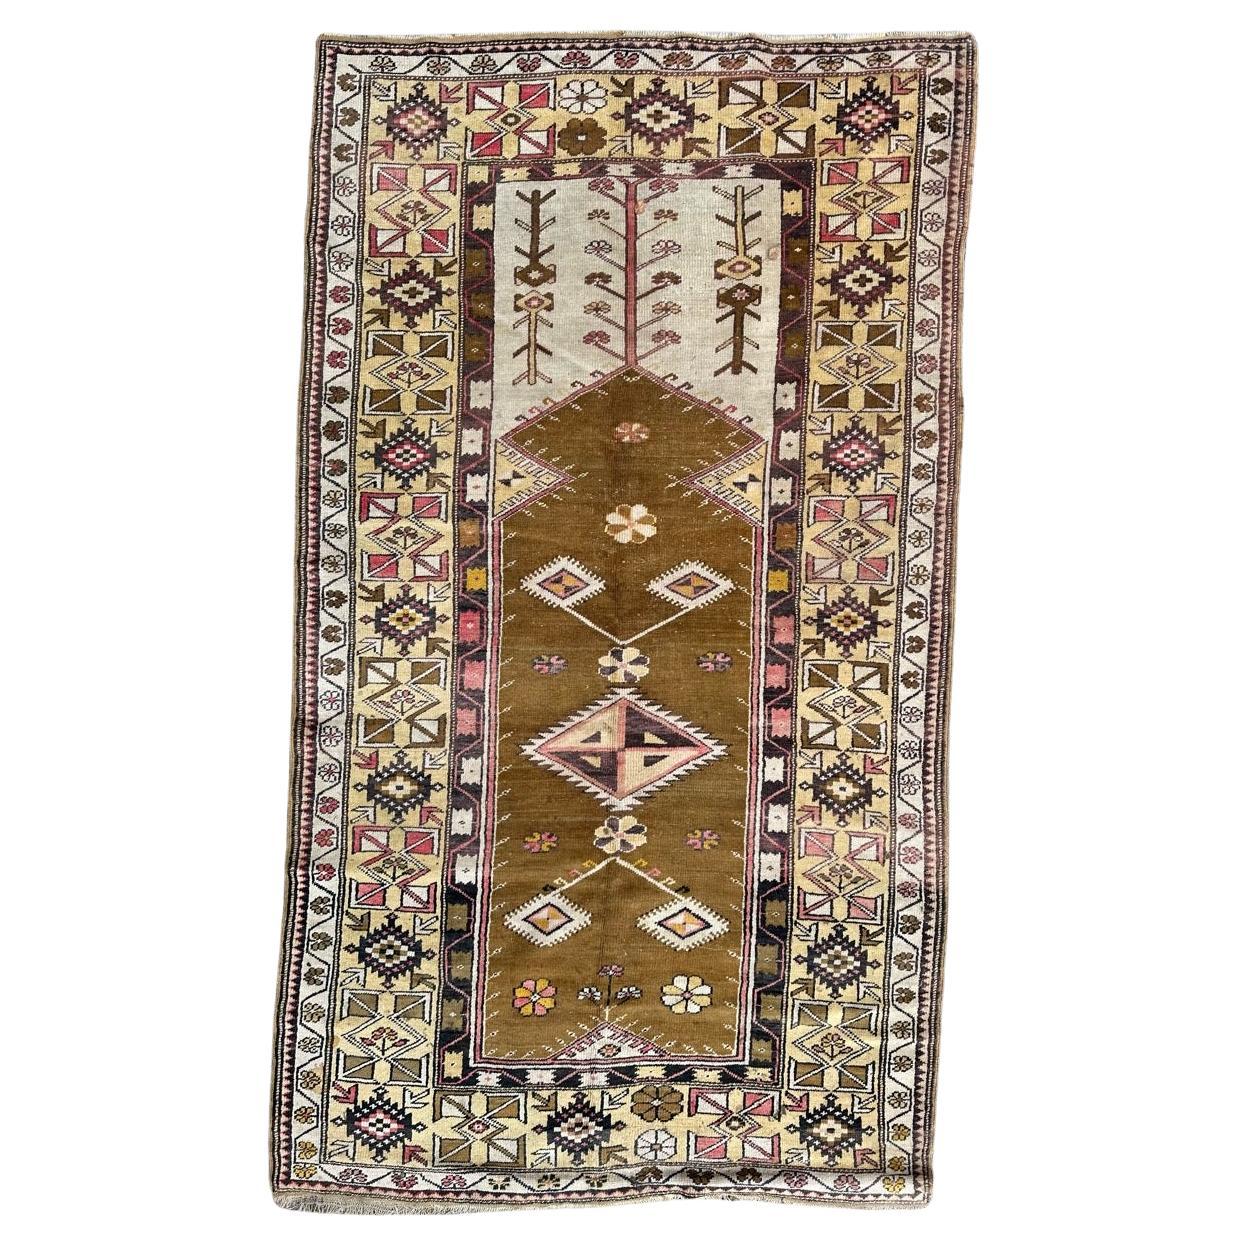 Le joli tapis turc vintage d'Anatolie de Bobyrug